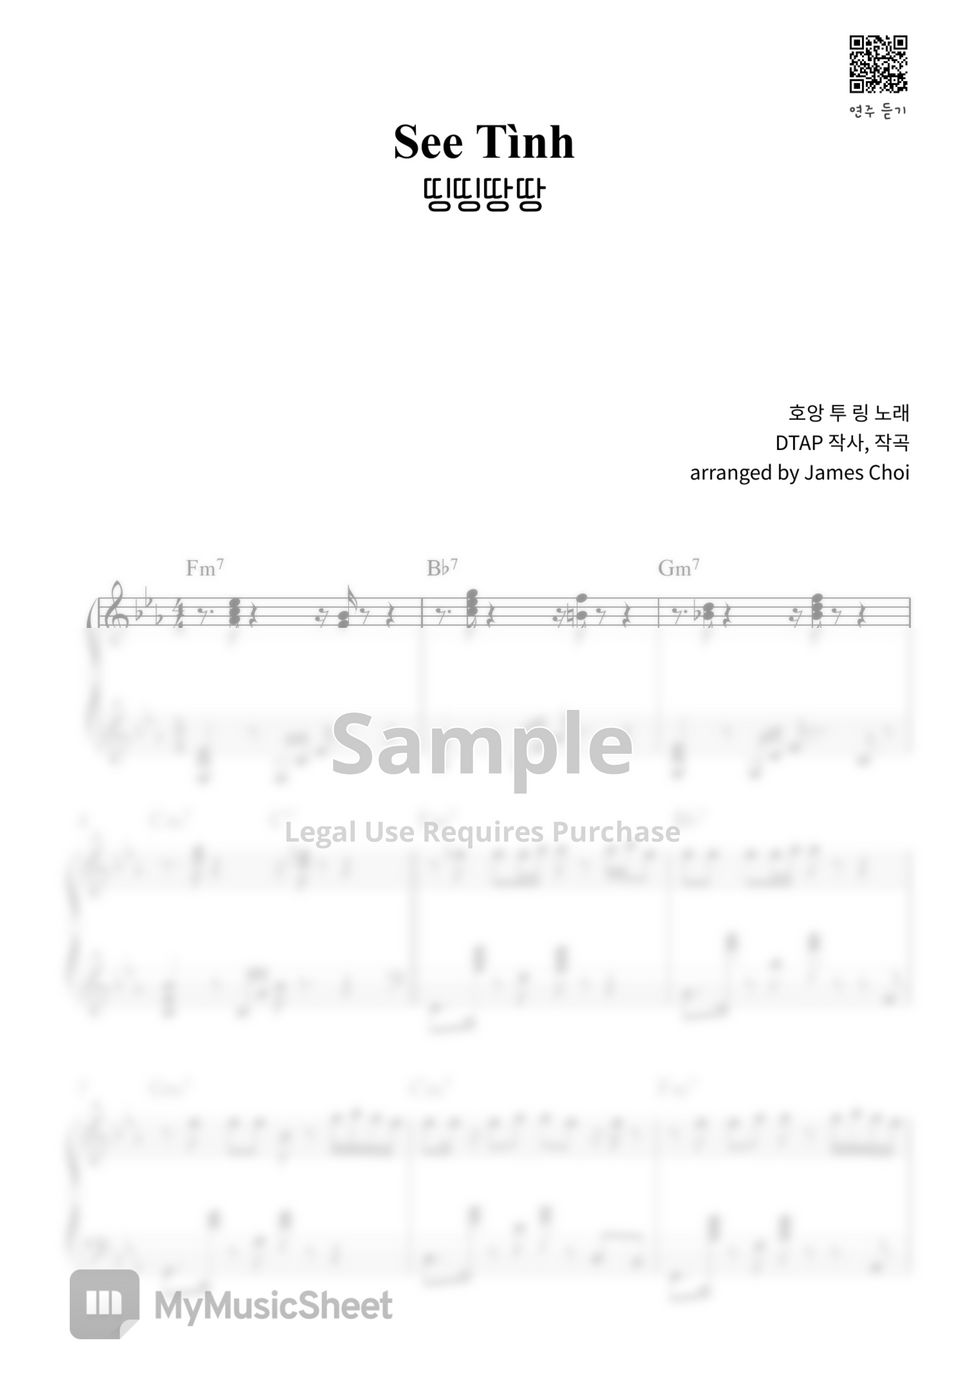 HOÀNG THUỲ LINH - See Tình (piano solo / with rhythm backing video) by James Choi